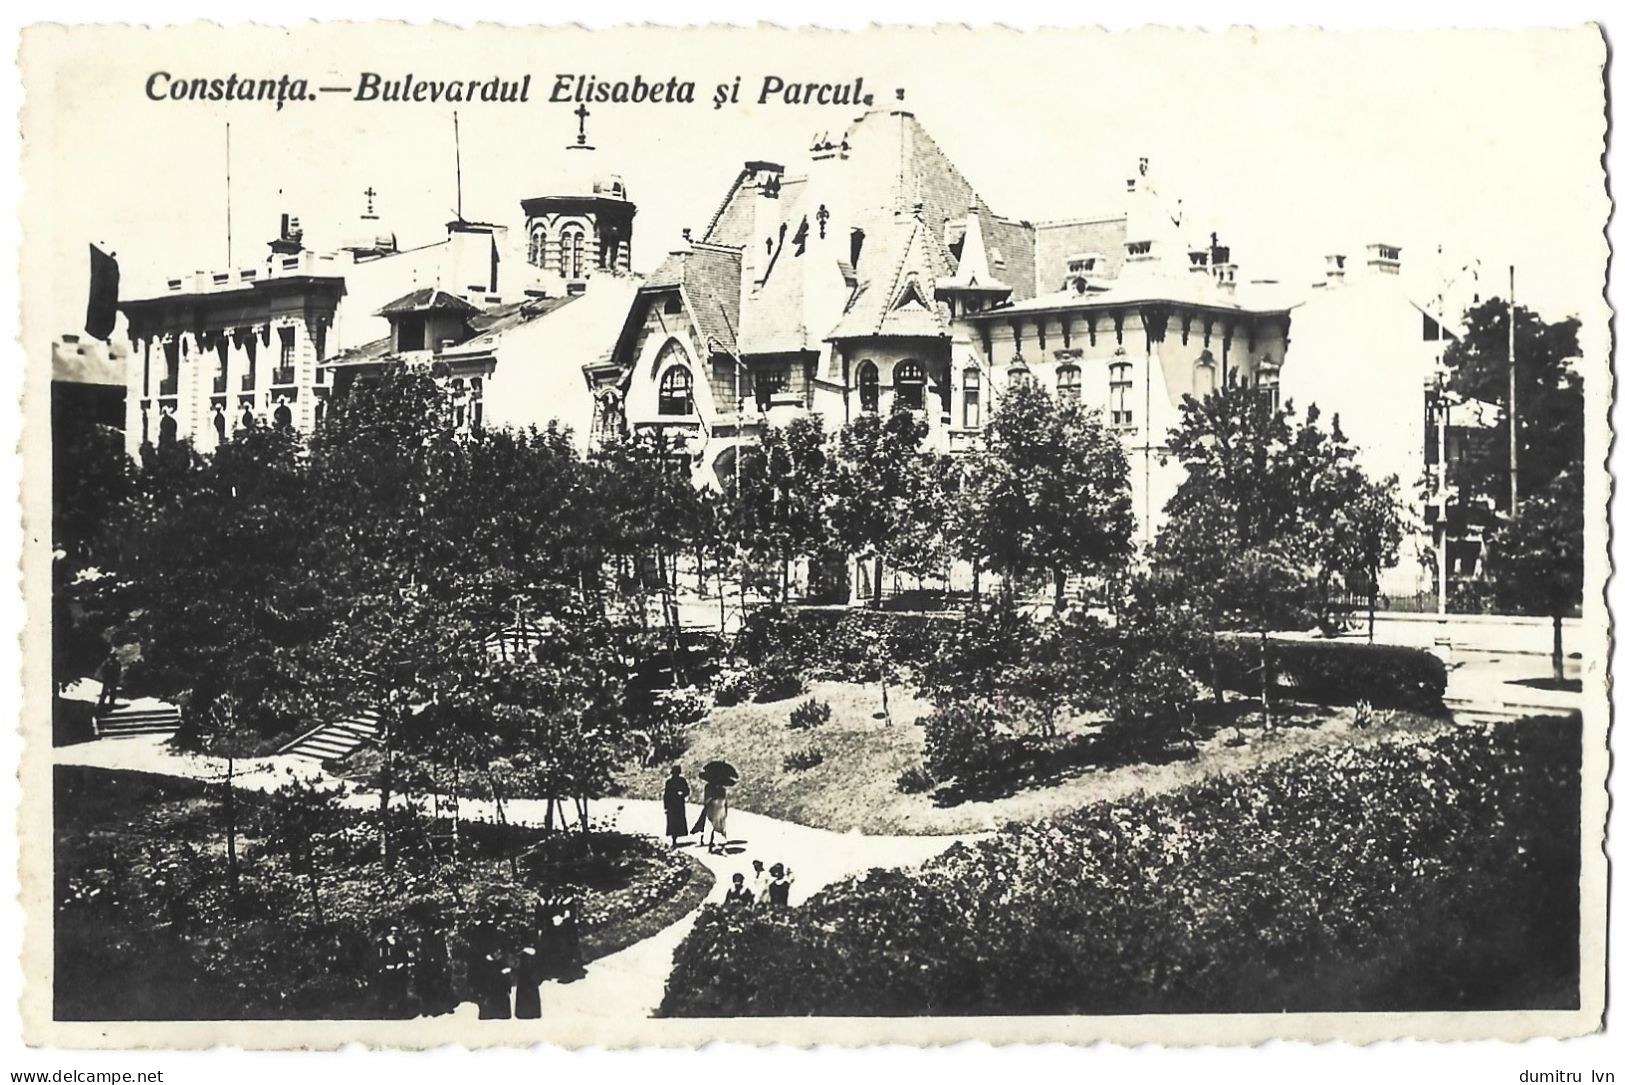 ROMANIA 1936 CONSTANTA - ELISABETA BOULEVARD AND THE PARK, BUILDINGS, ARCHITECTURE, PEOPLE - Romania